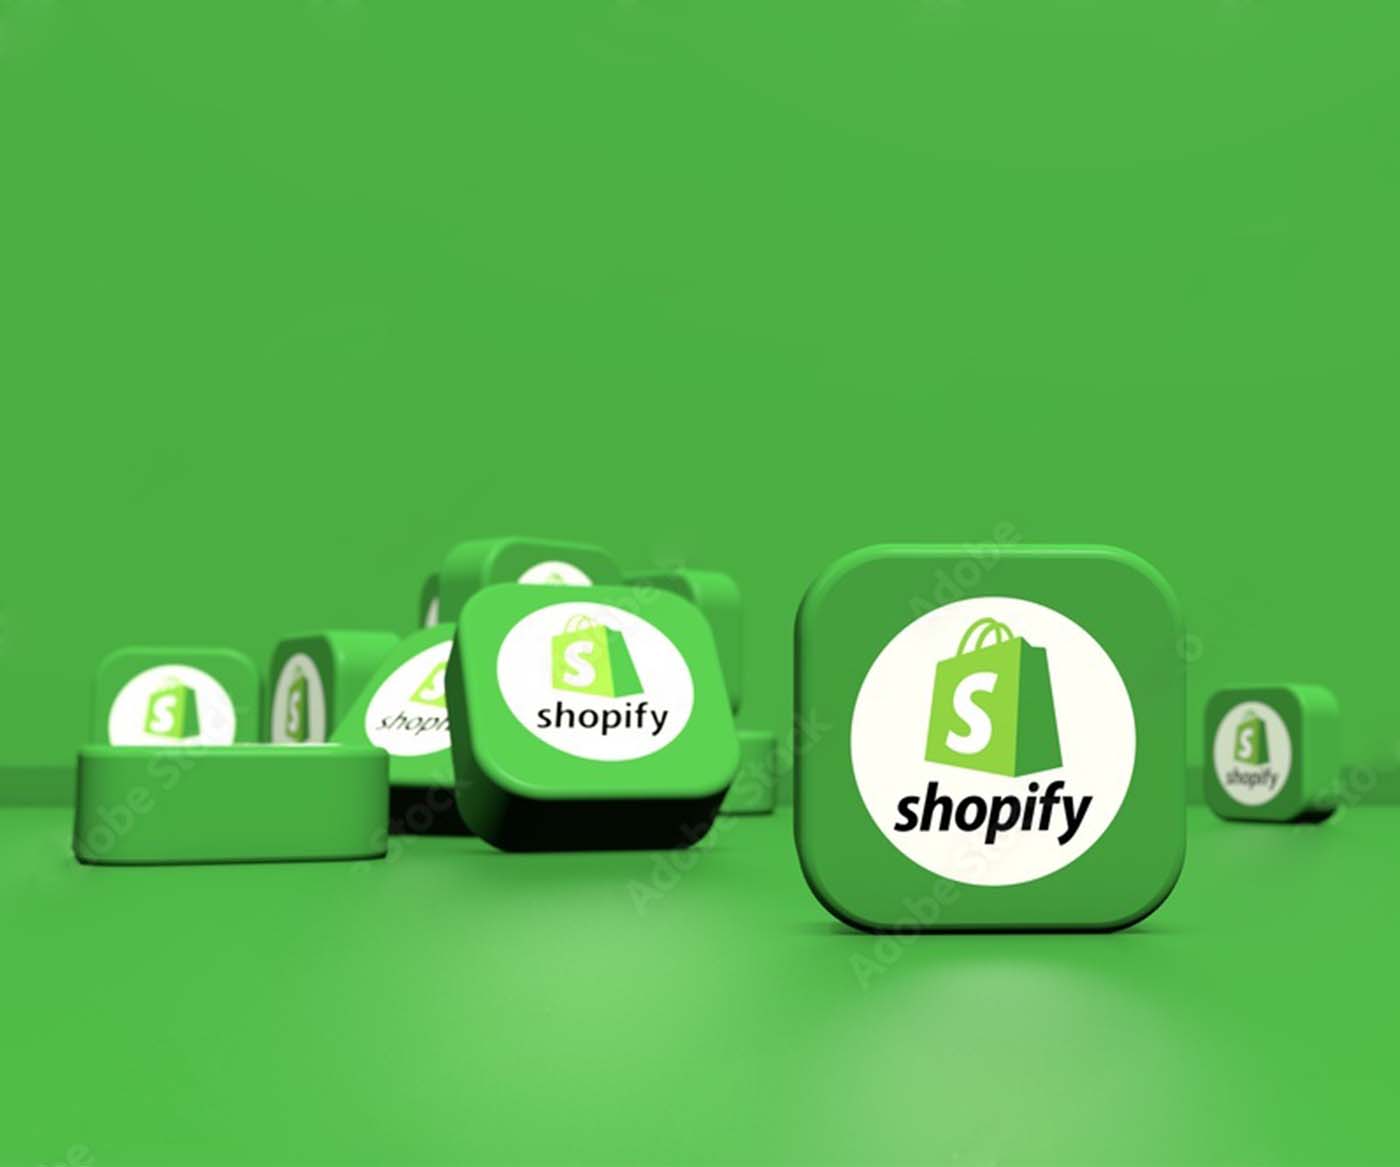 Shopify logos